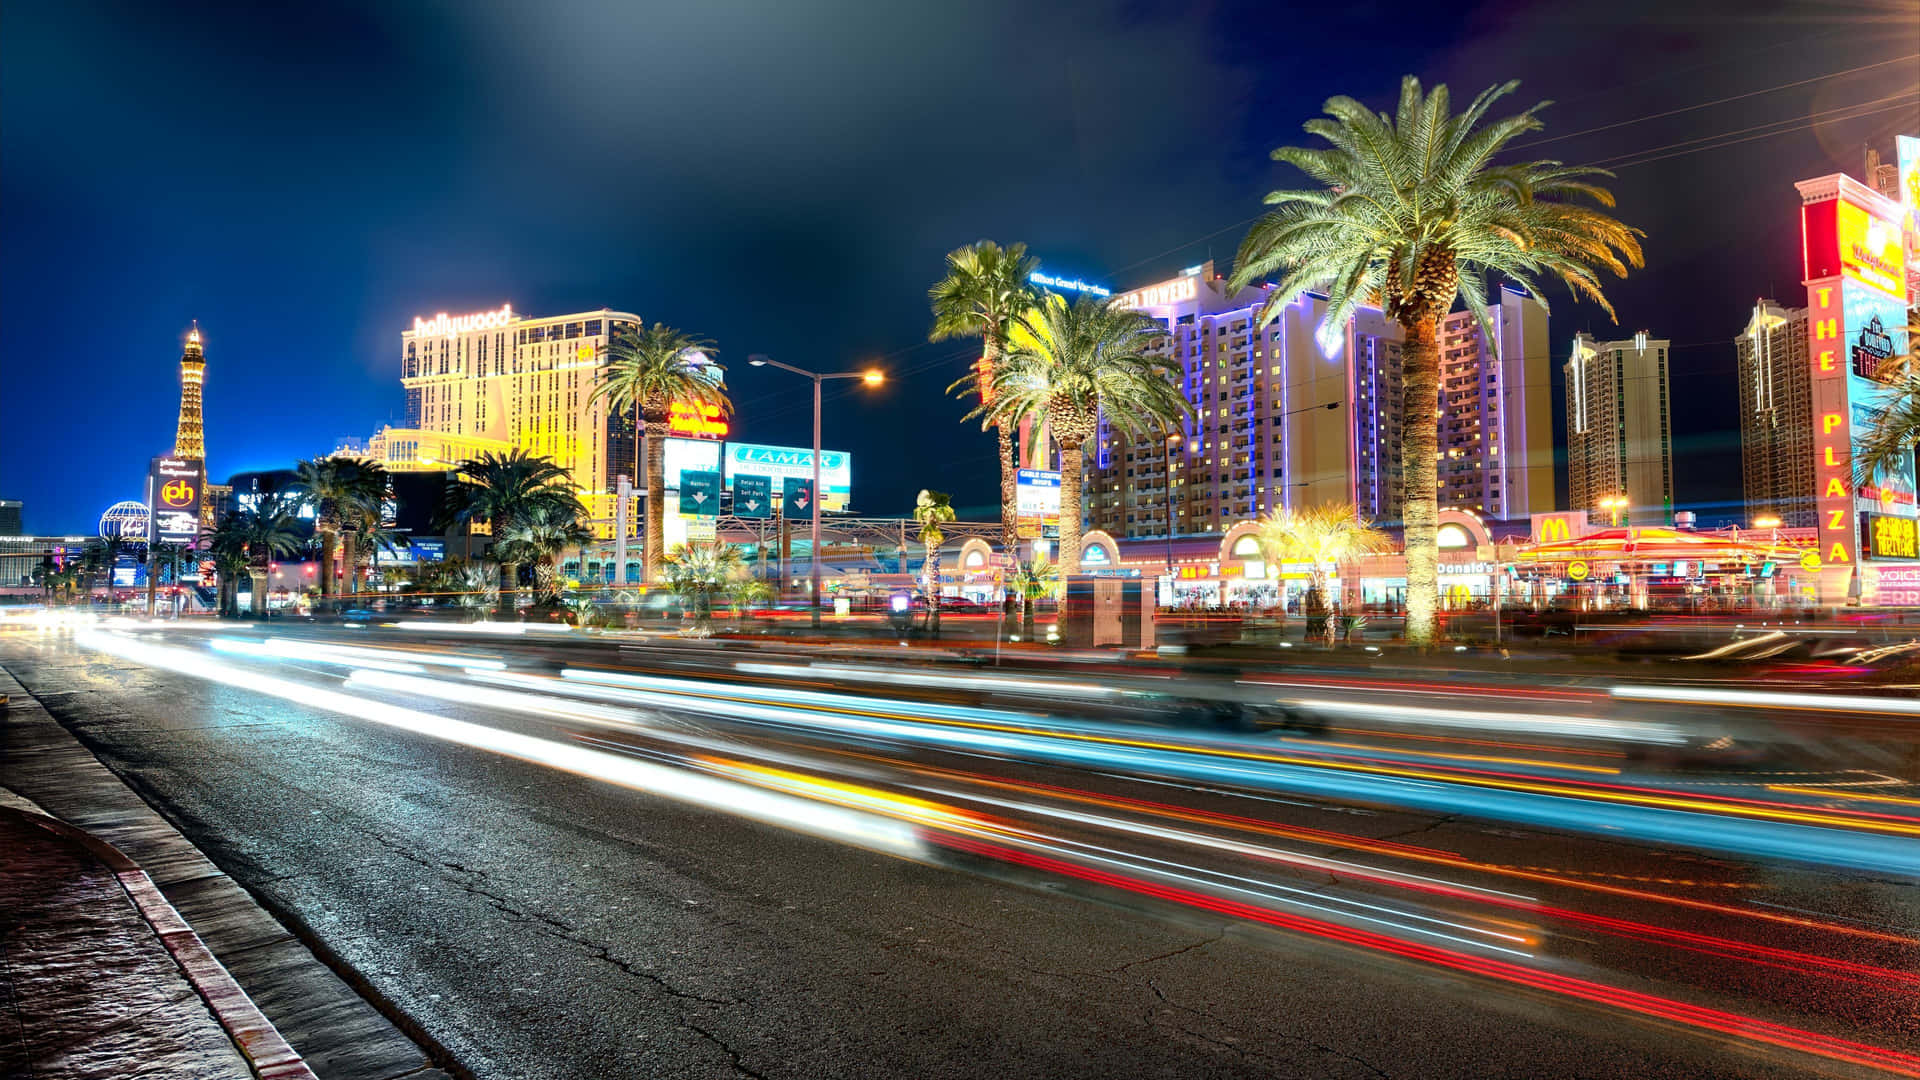 "Lights of Vegas".